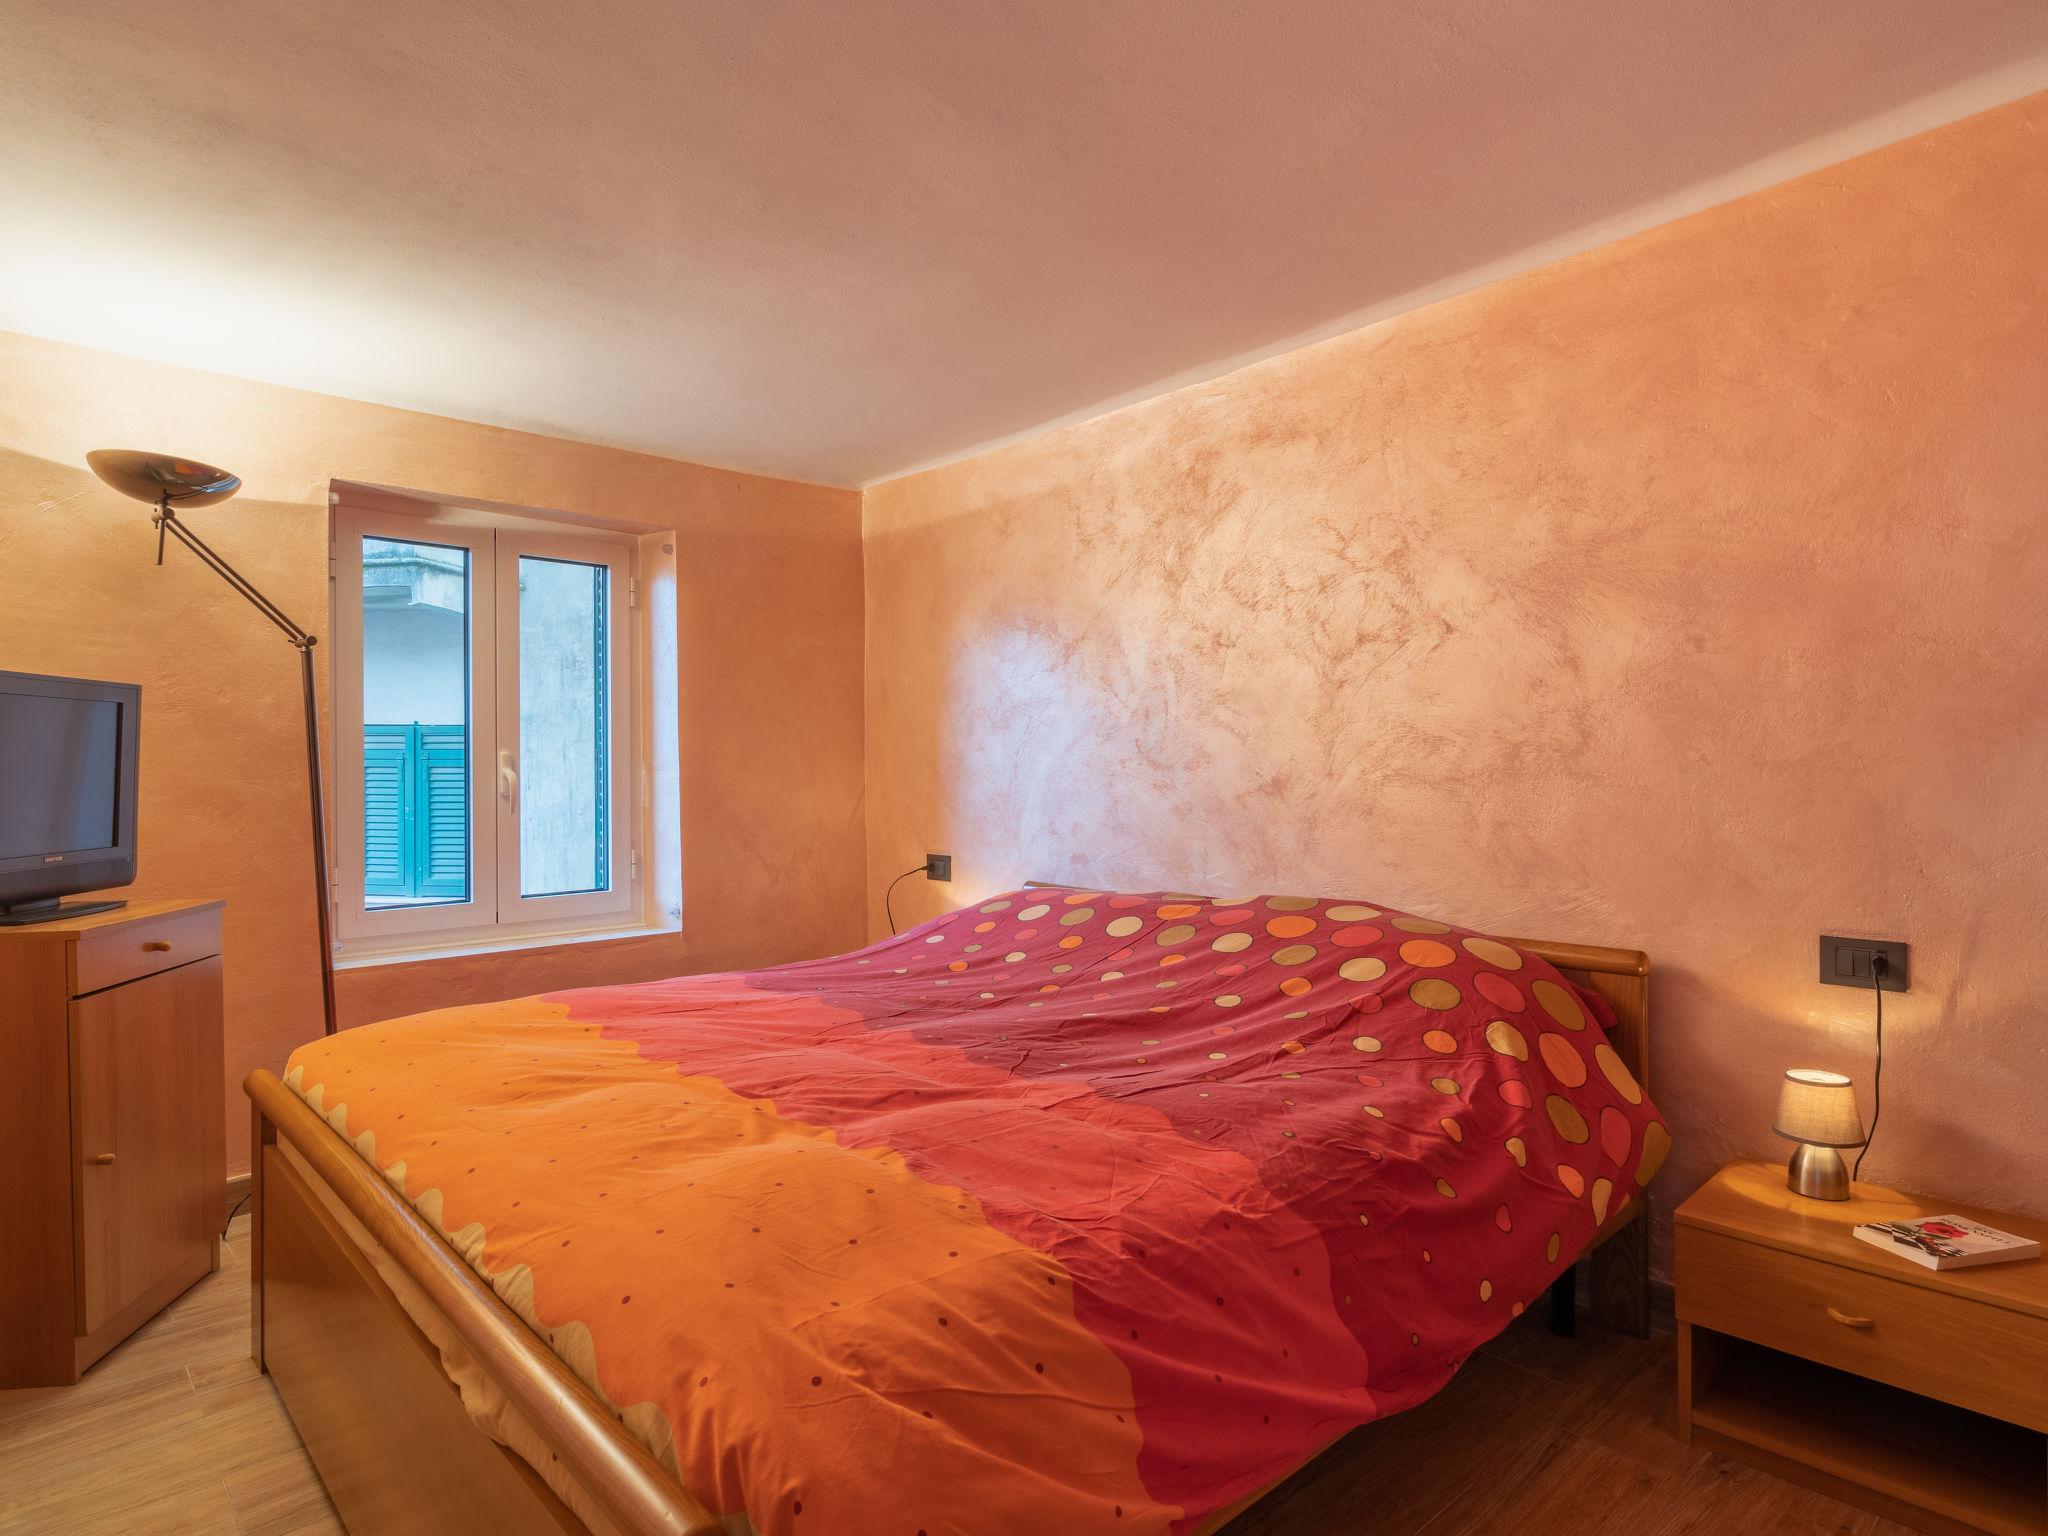 Photo 3 - 1 bedroom Apartment in Ventimiglia with sea view